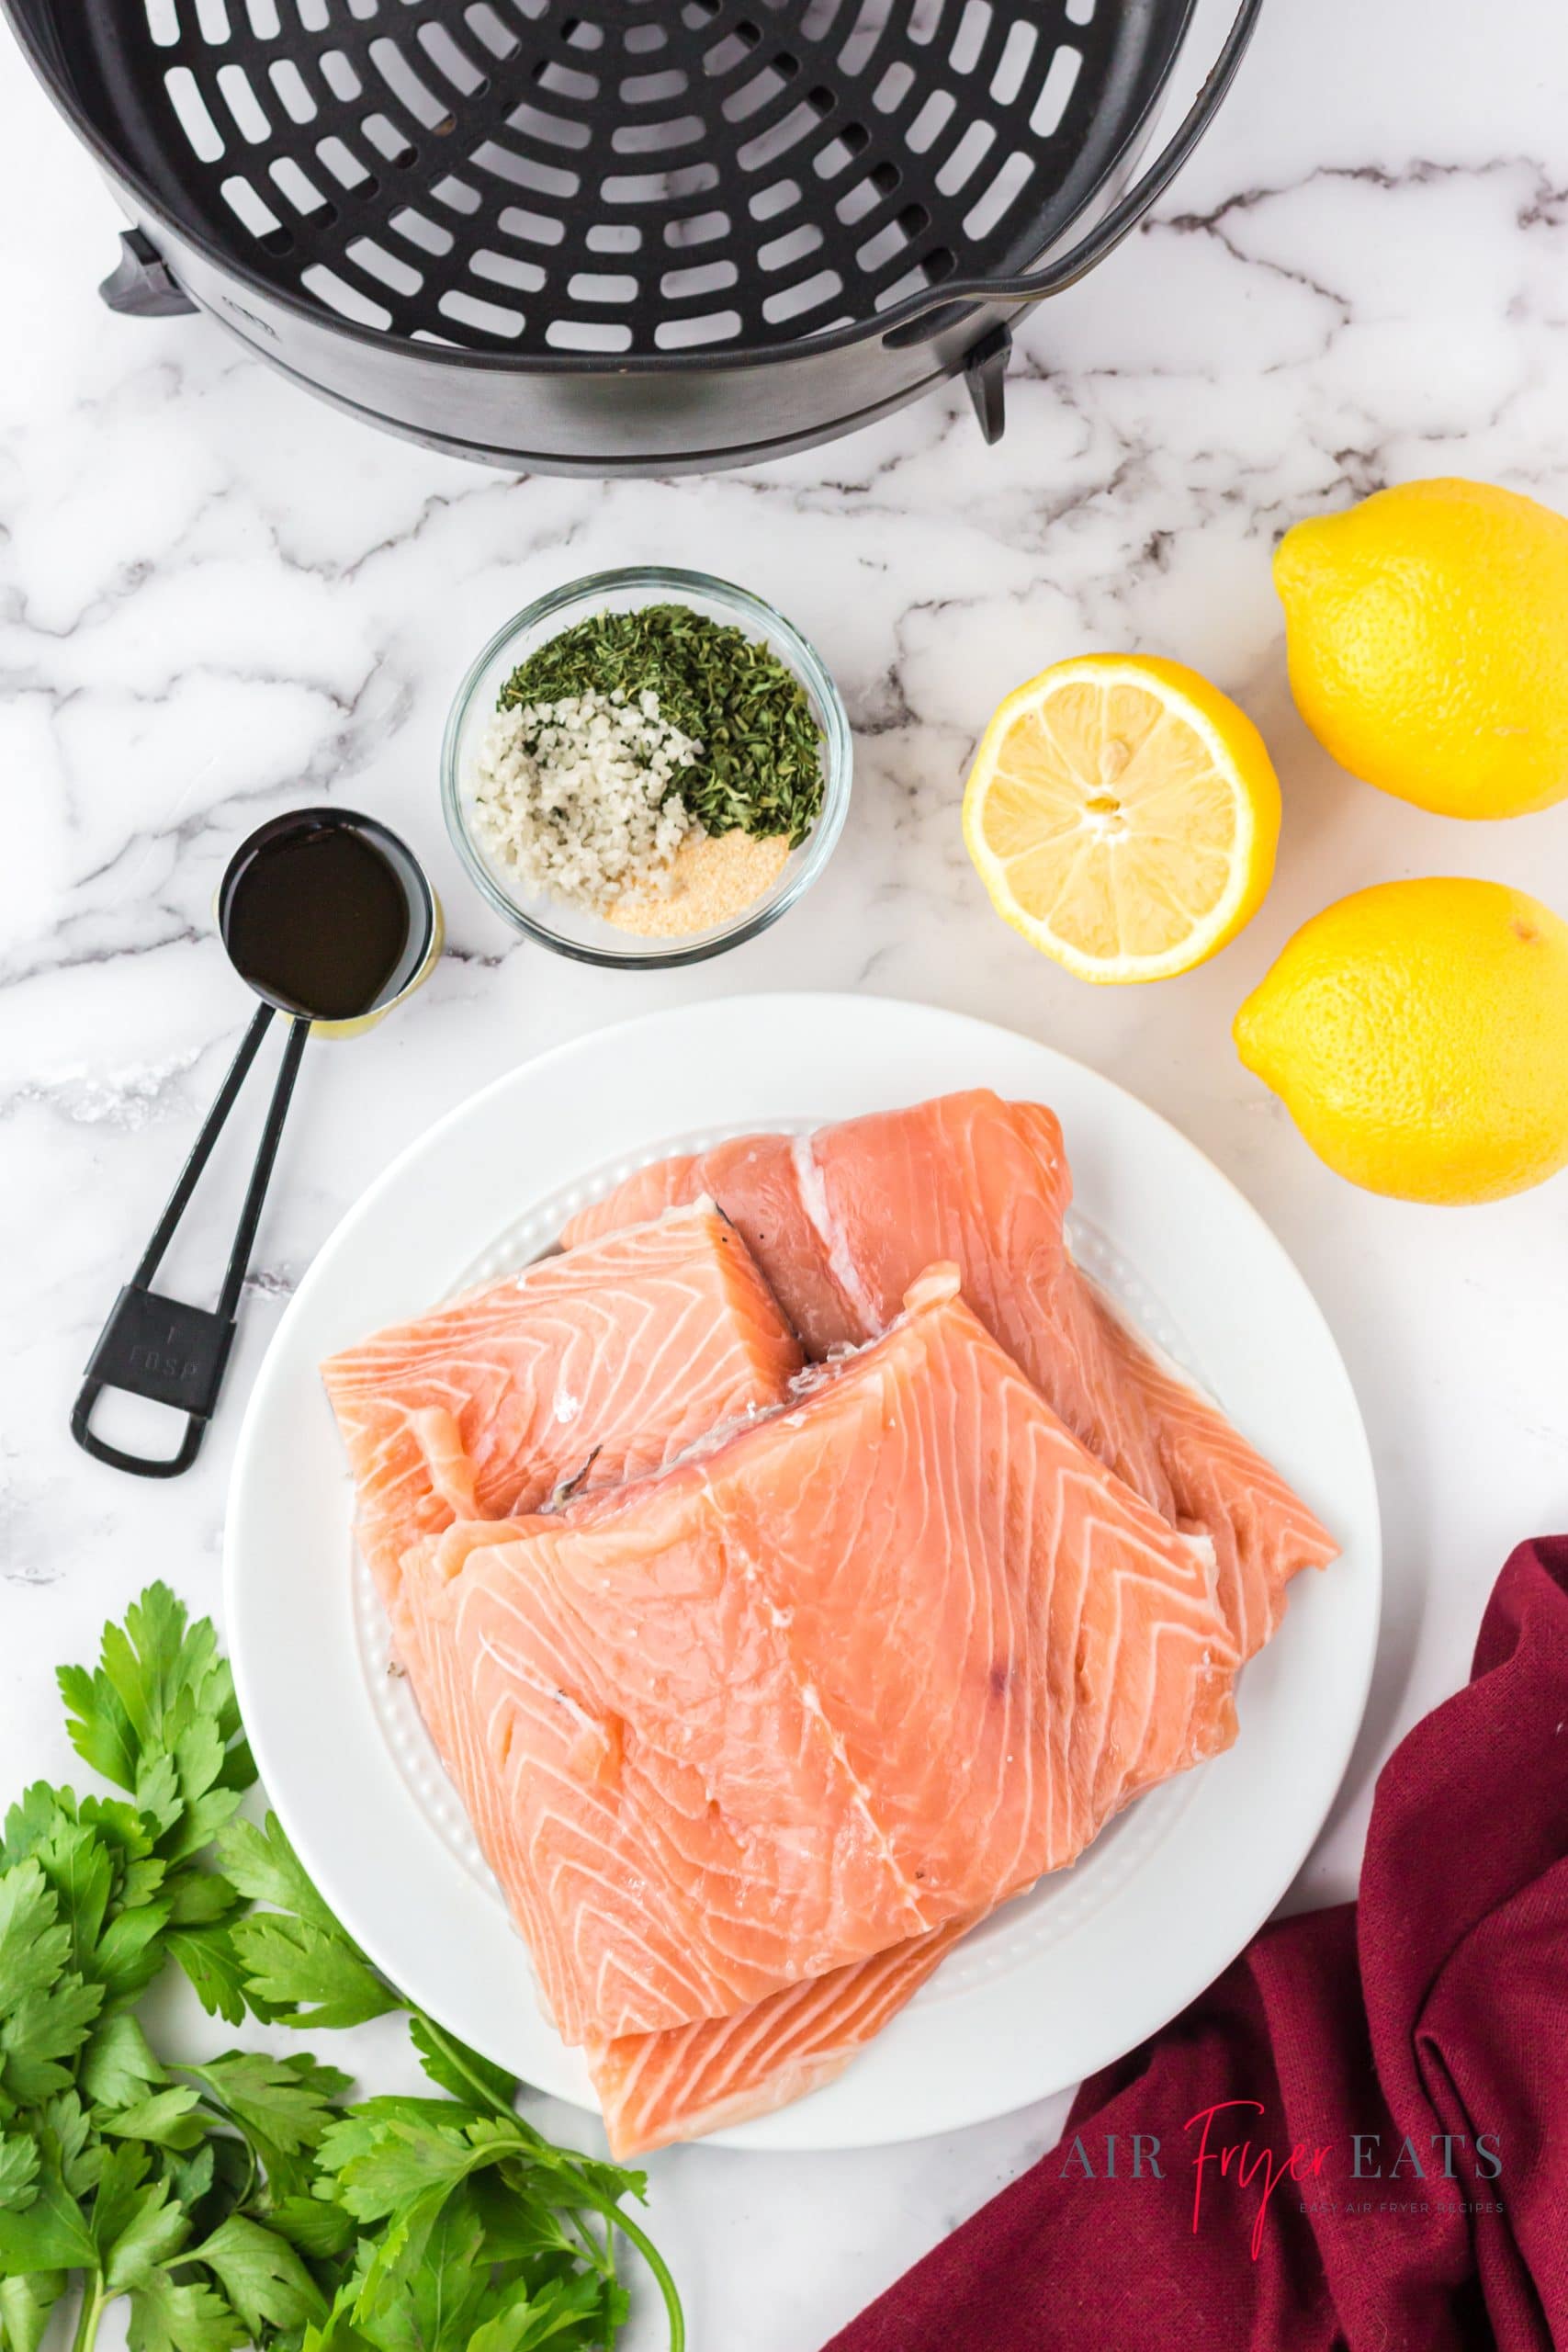 Ingredients needed to make salmon in ninja foodi, including raw salmon filets, lemon, and seasonings